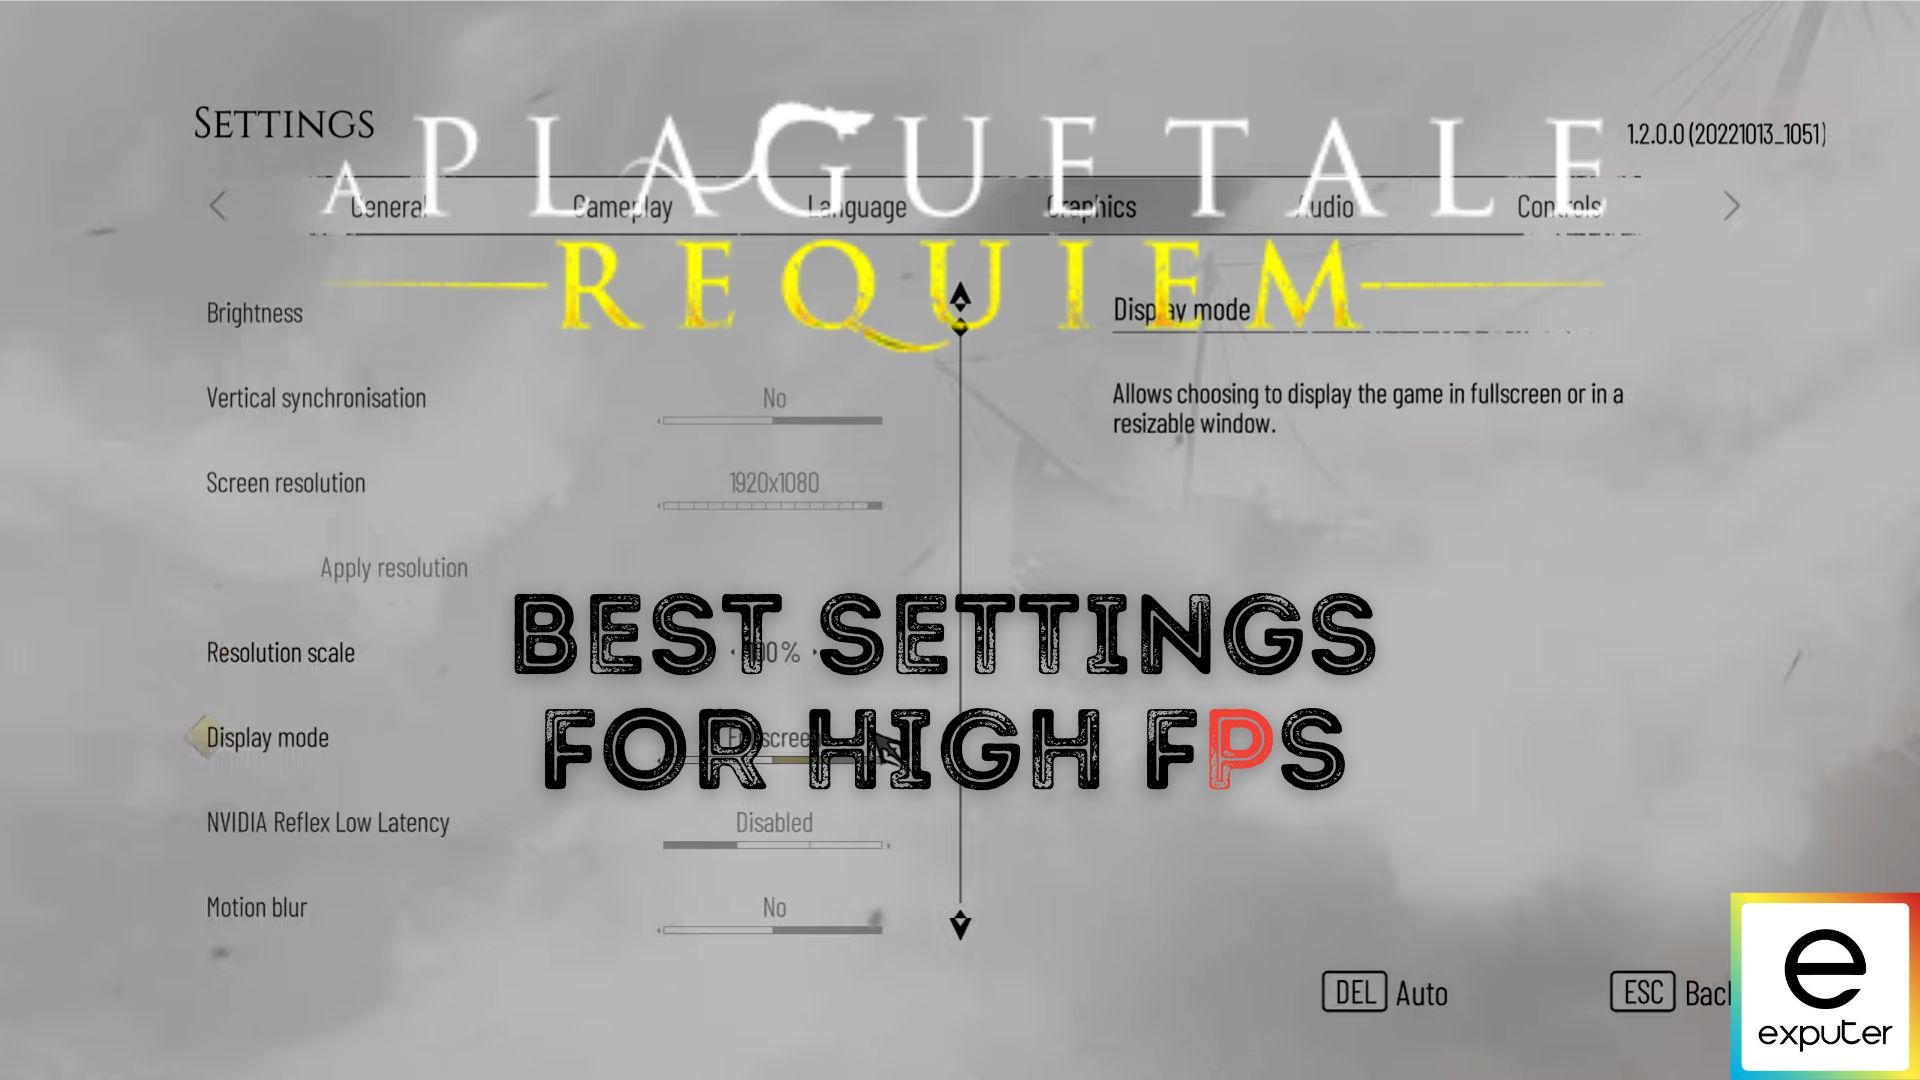 A Plague Tale: Requiem now has a 60fps option - so what's the